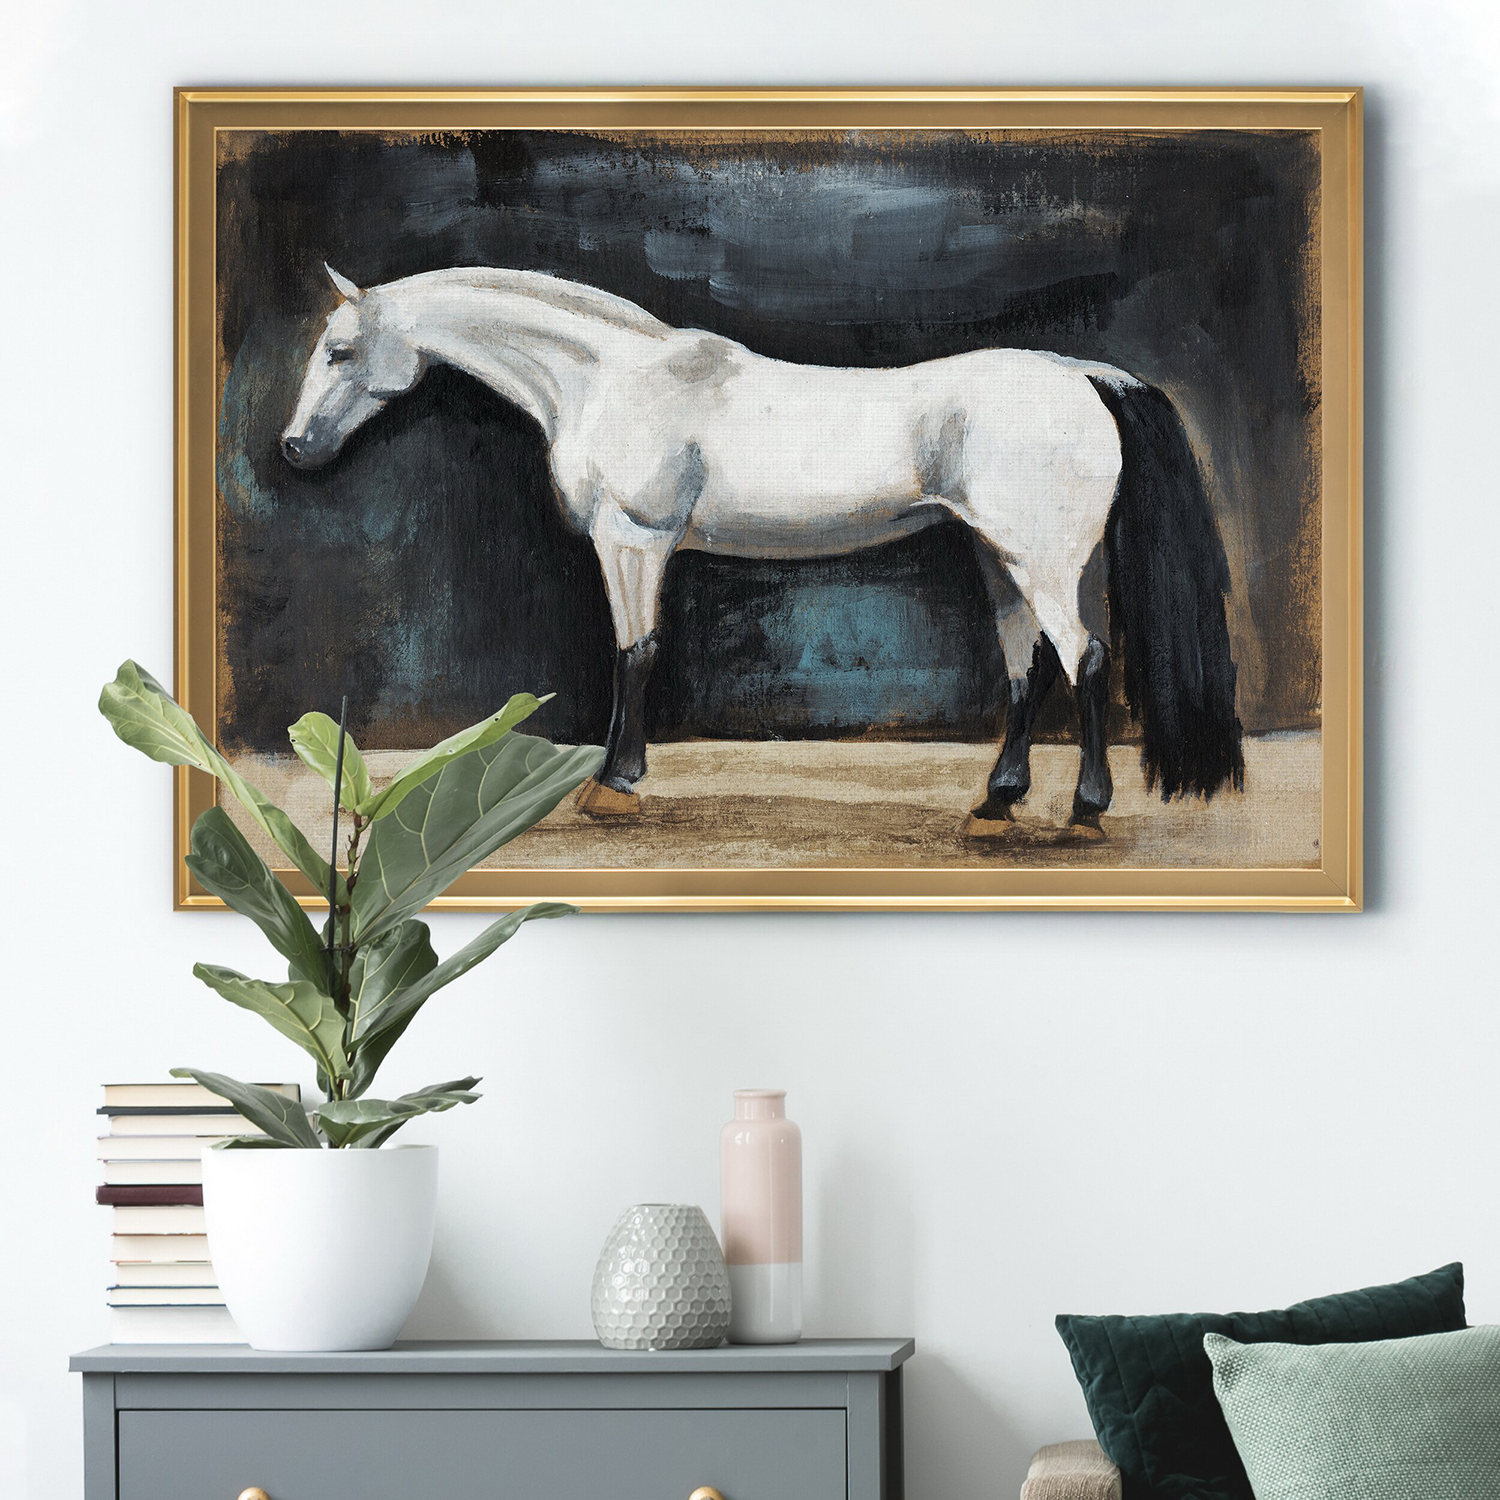 Framed horse on canvas